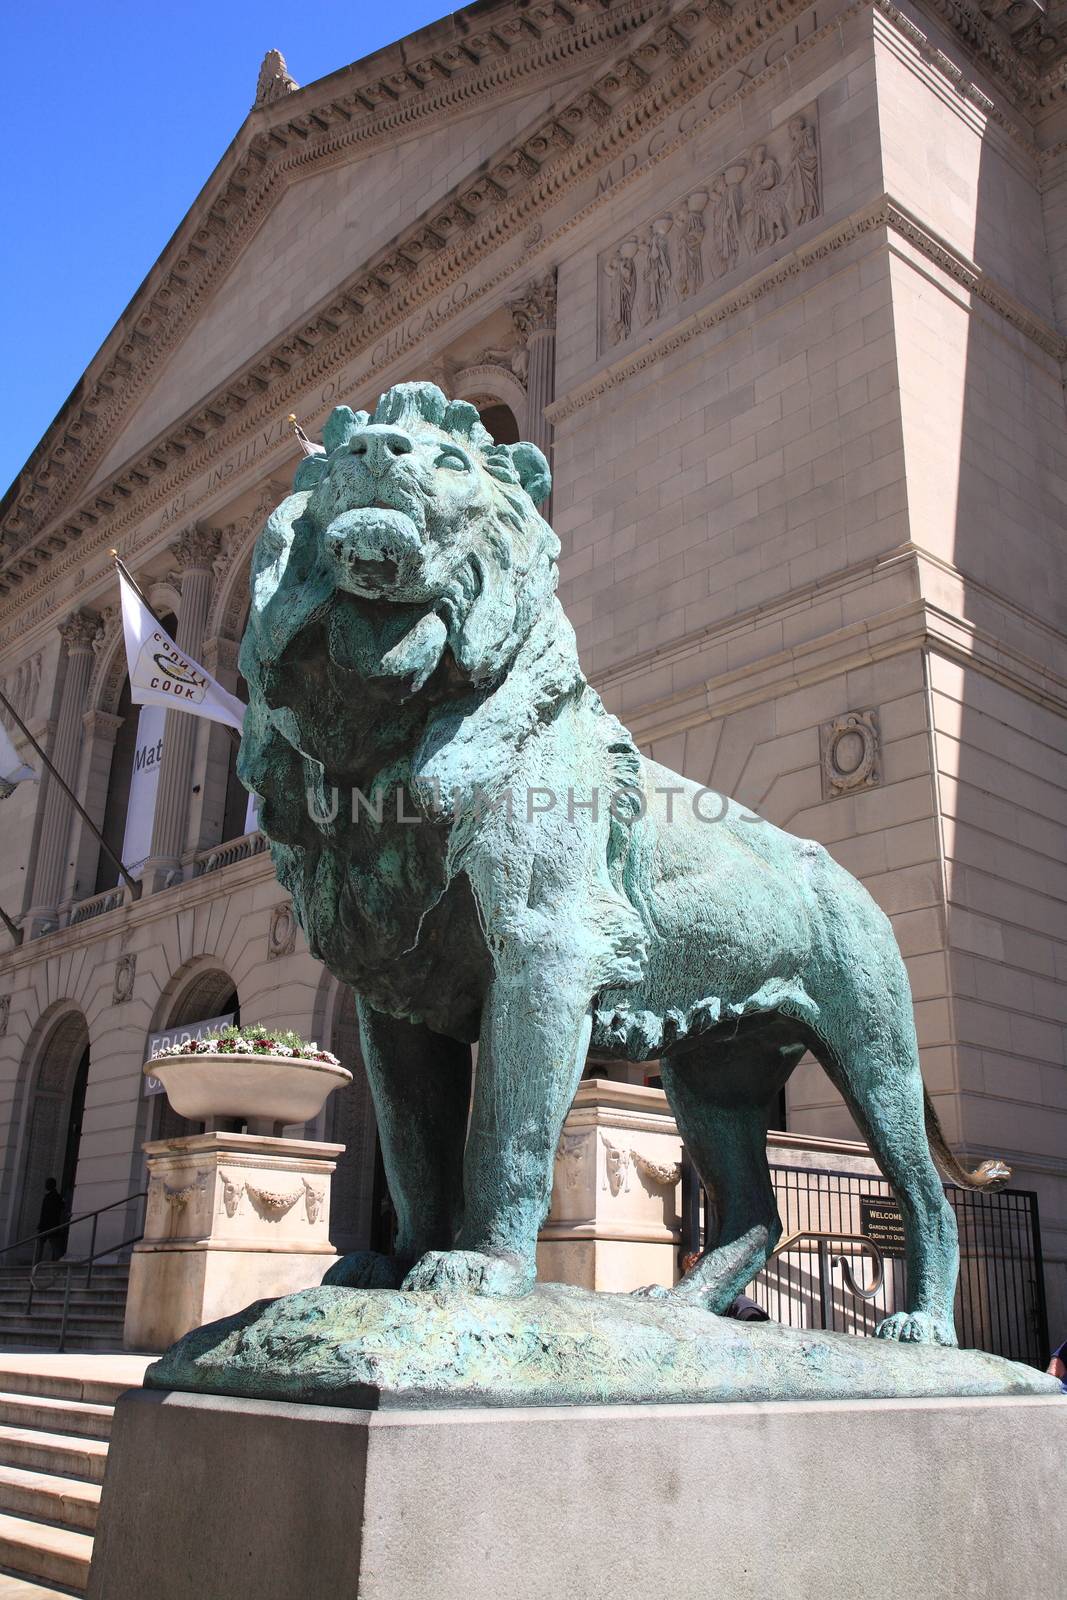 Chicago Art Institute near Grant Park in Chicago, Illionois. Famous lion statues are found outside on Michigan Avenue.